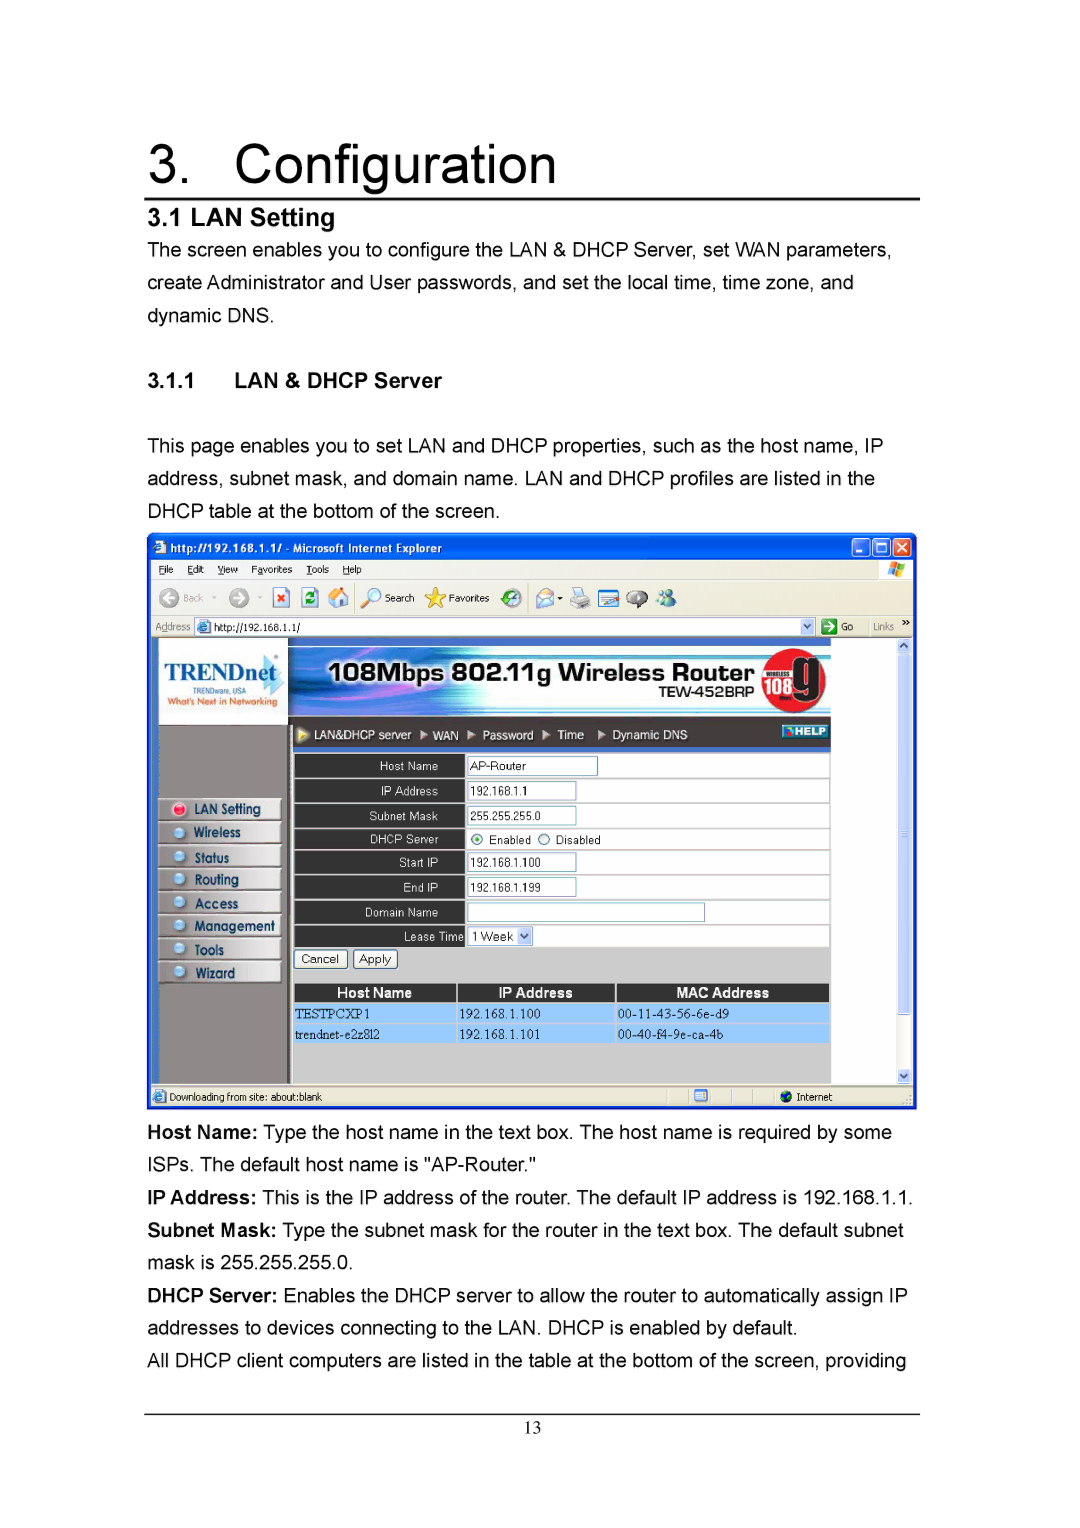 TRENDnet TEW-452BRP, 108Mbps 802.11g Wireless Firewall Router manual LAN Setting, LAN & Dhcp Server 